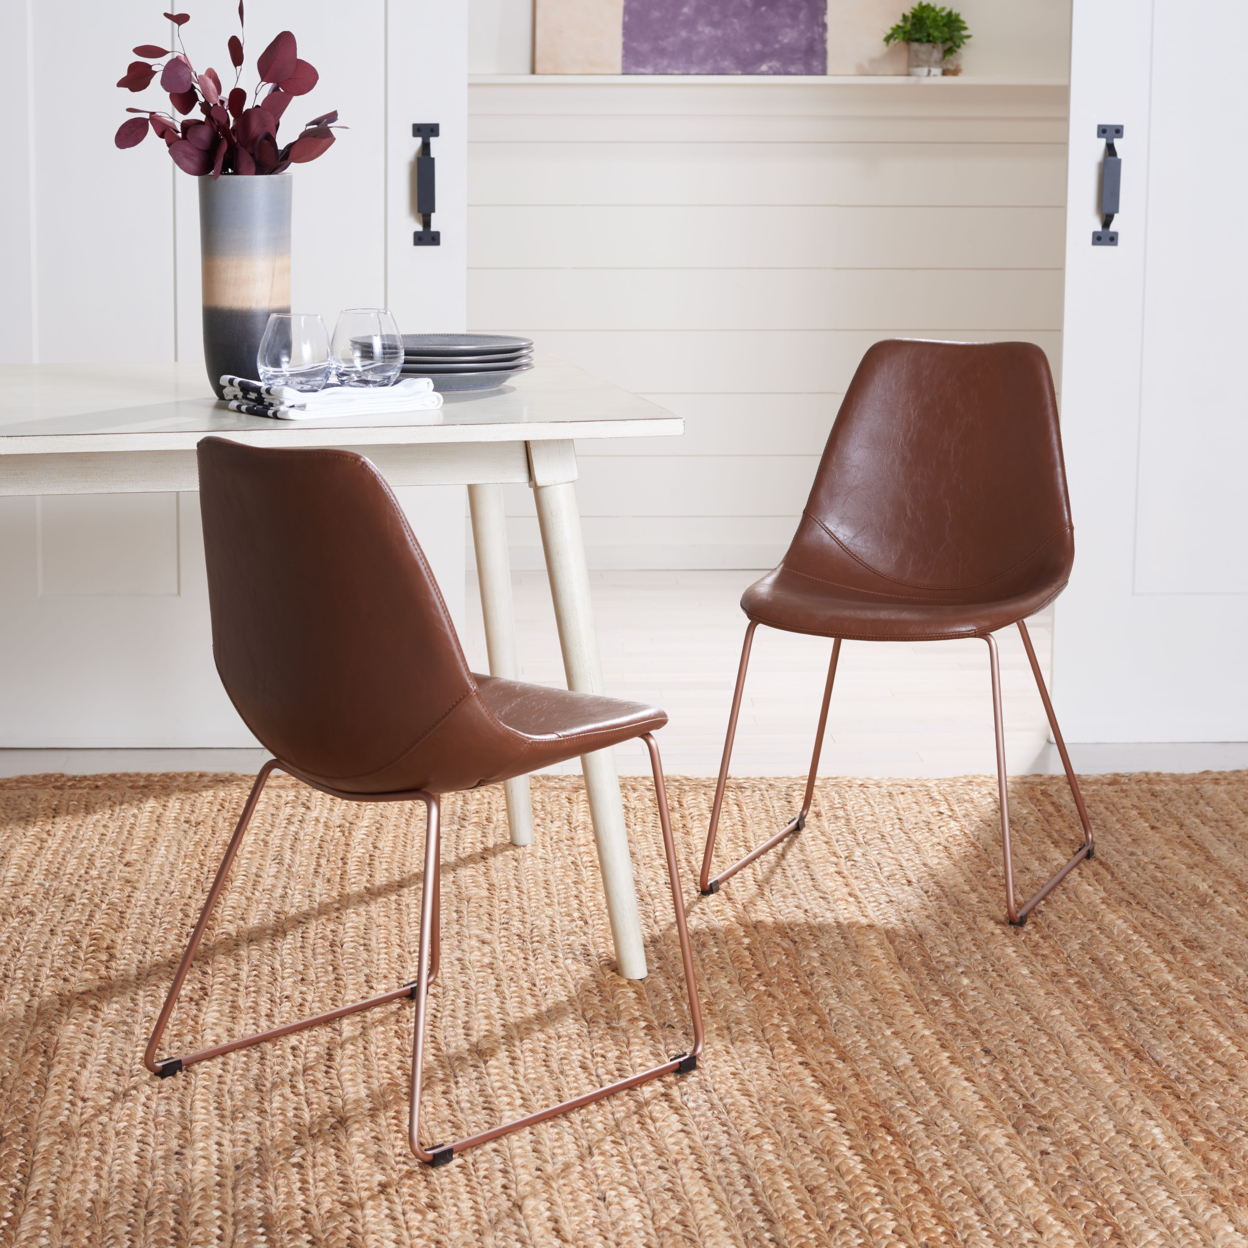 SAFAVIEH Dorian Mid-Century Modern Leather Dining Chair Light Brown / Copper